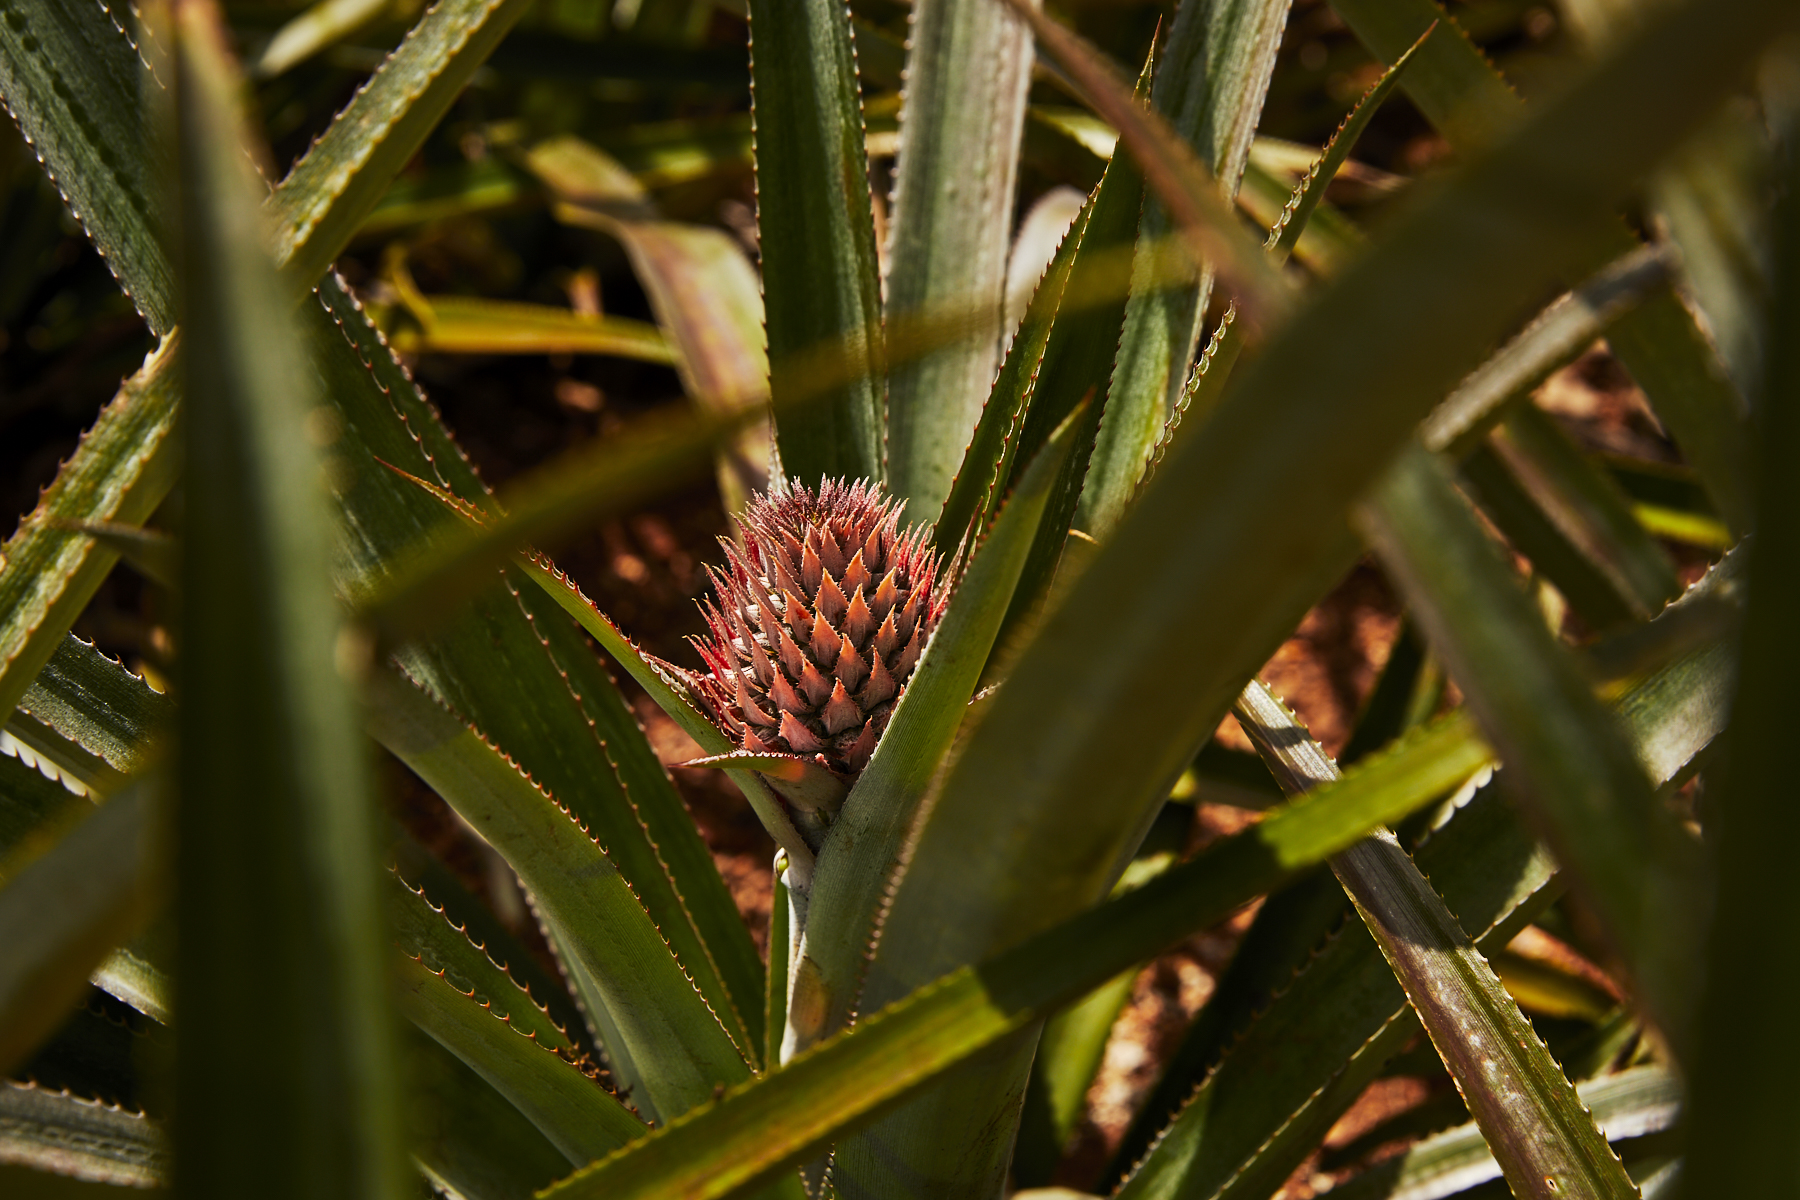 Mo'orea Pineapple fields